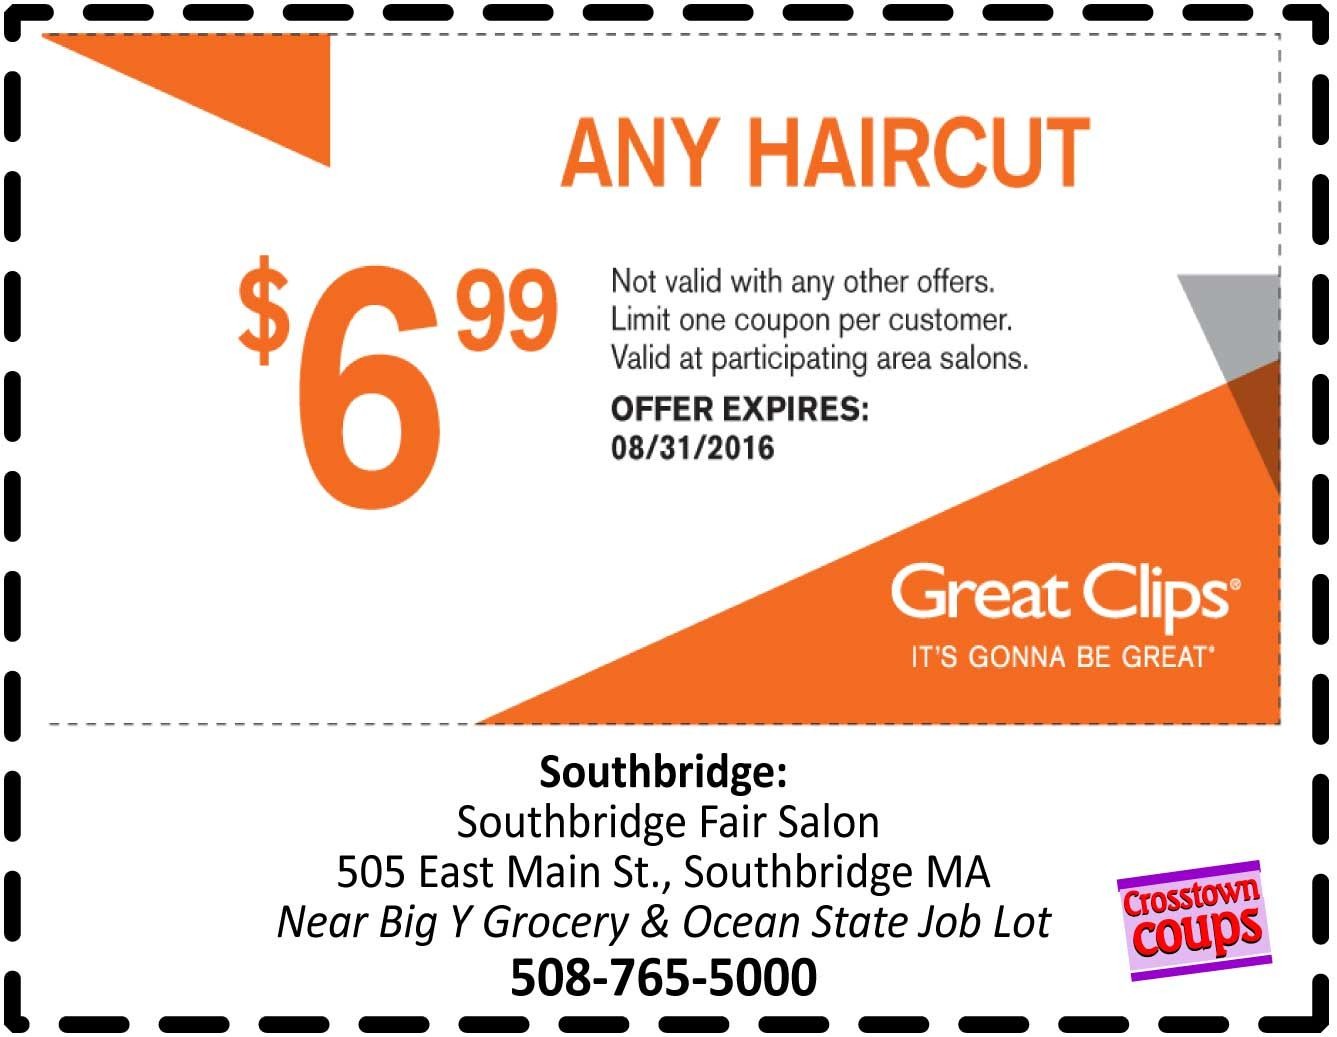 27 Great Clips Free Haircut Coupon | Hairstyles Ideas - Supercuts Free Haircut Printable Coupon